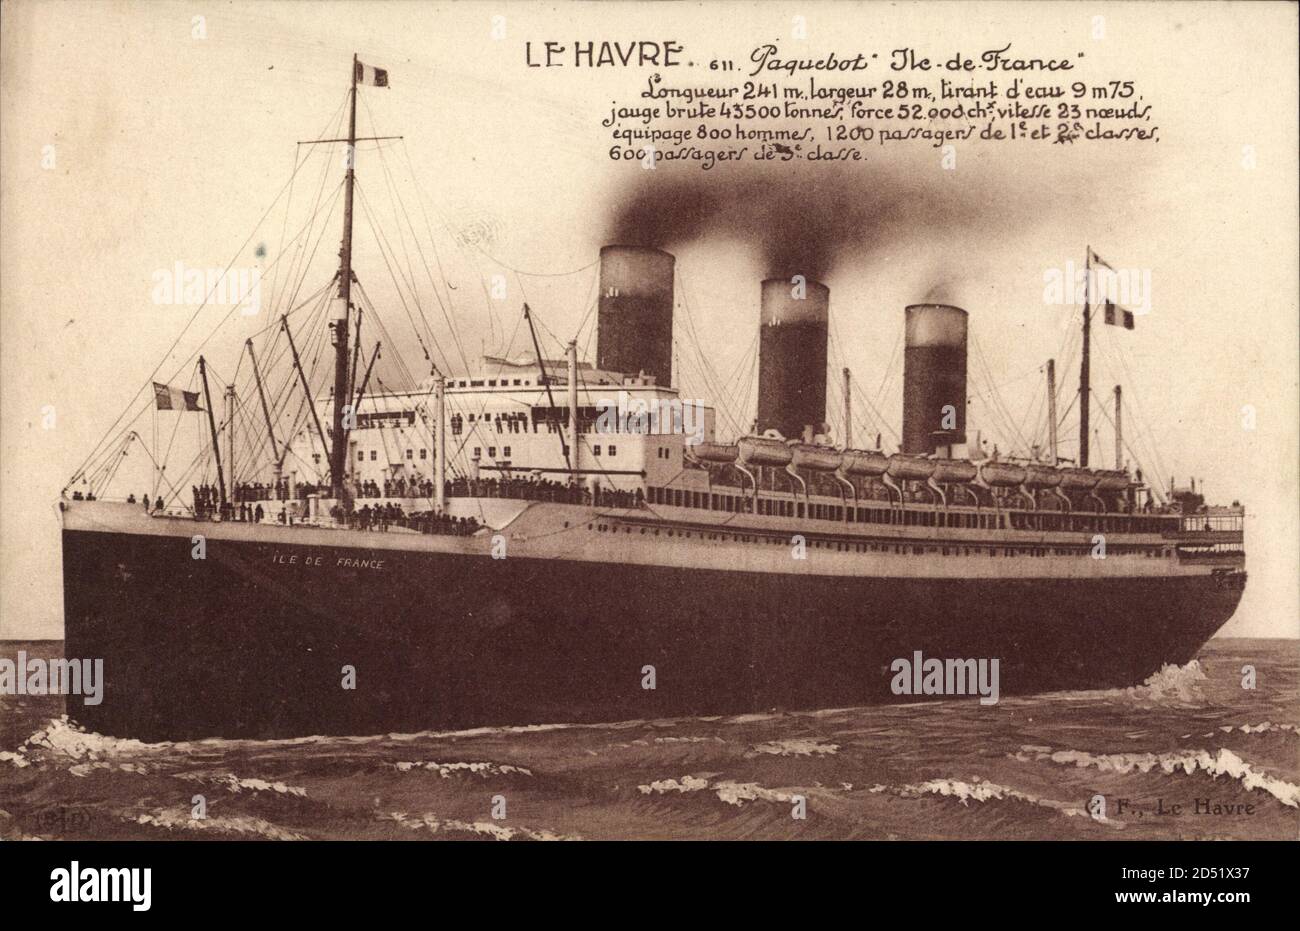 Le Havre, Paquebot Ile de France, Dampfer bei voller Fahrt | usage worldwide Stock Photo